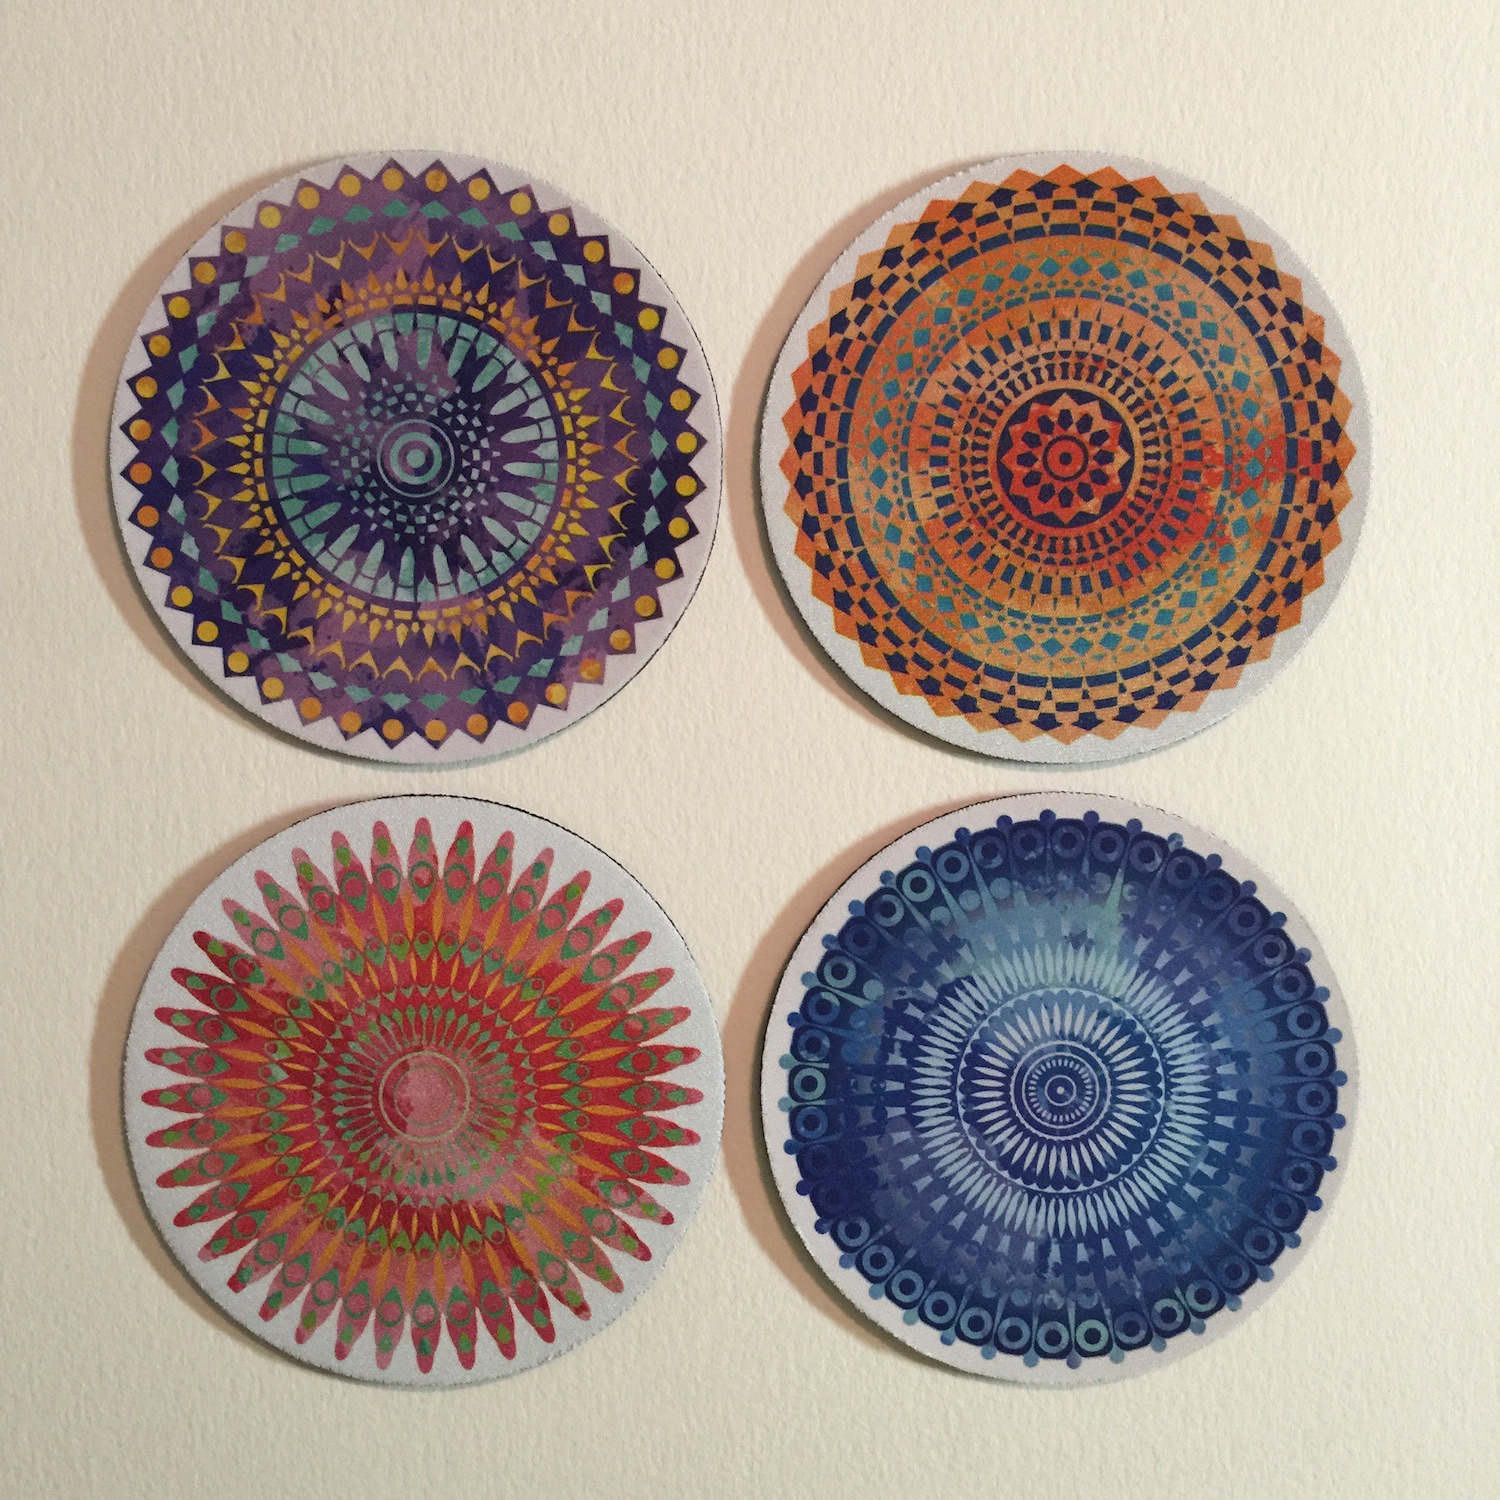 Mandala Coasters made with sublimation printing